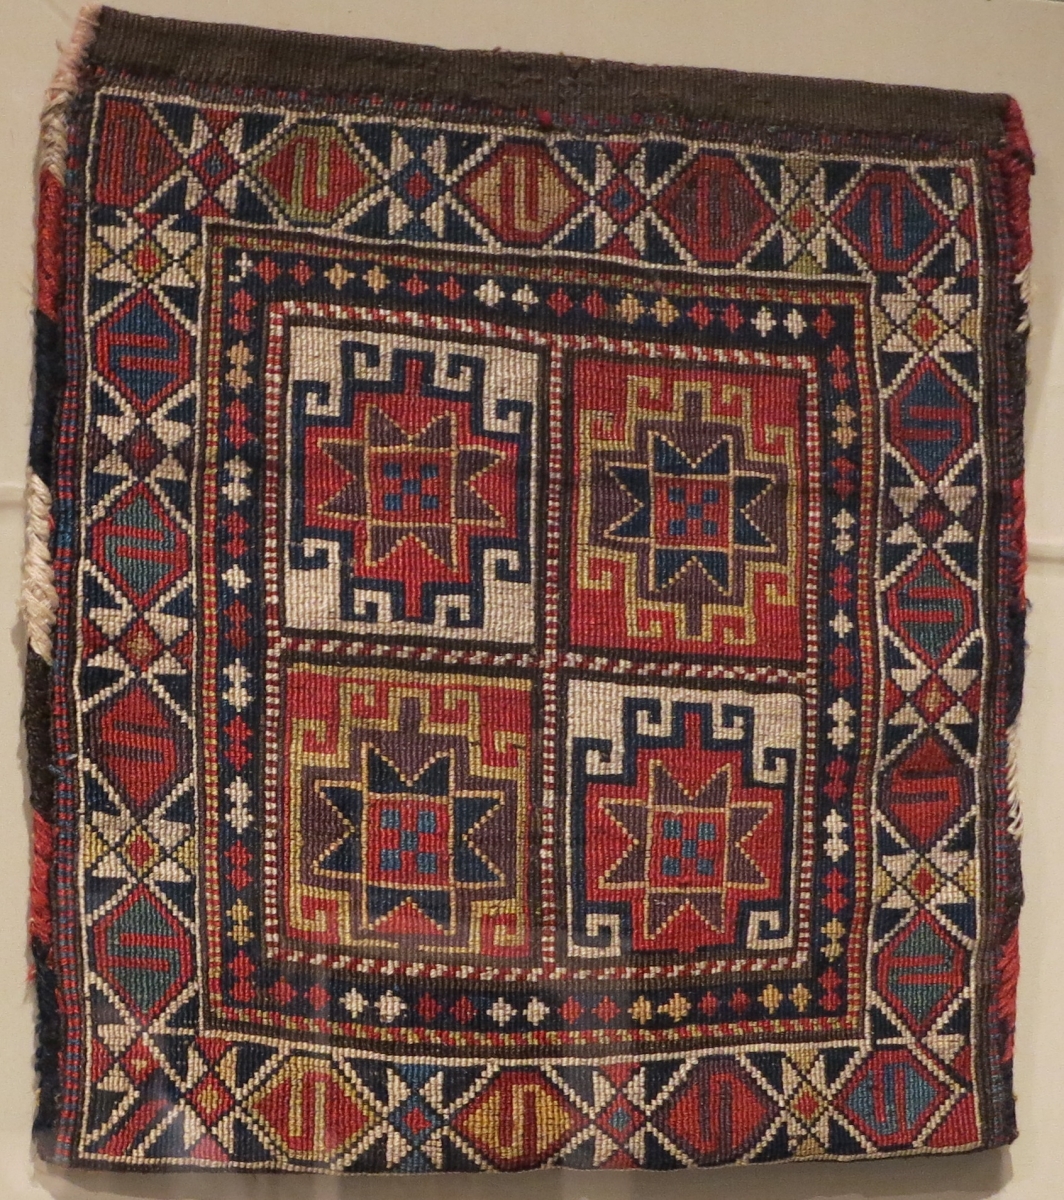 bag (khorjin half) woven in reverse sumak technique, Khamseh area of Iranian Azerbaijan, Ginsberg Collection in the Metropolitan Museum of Art